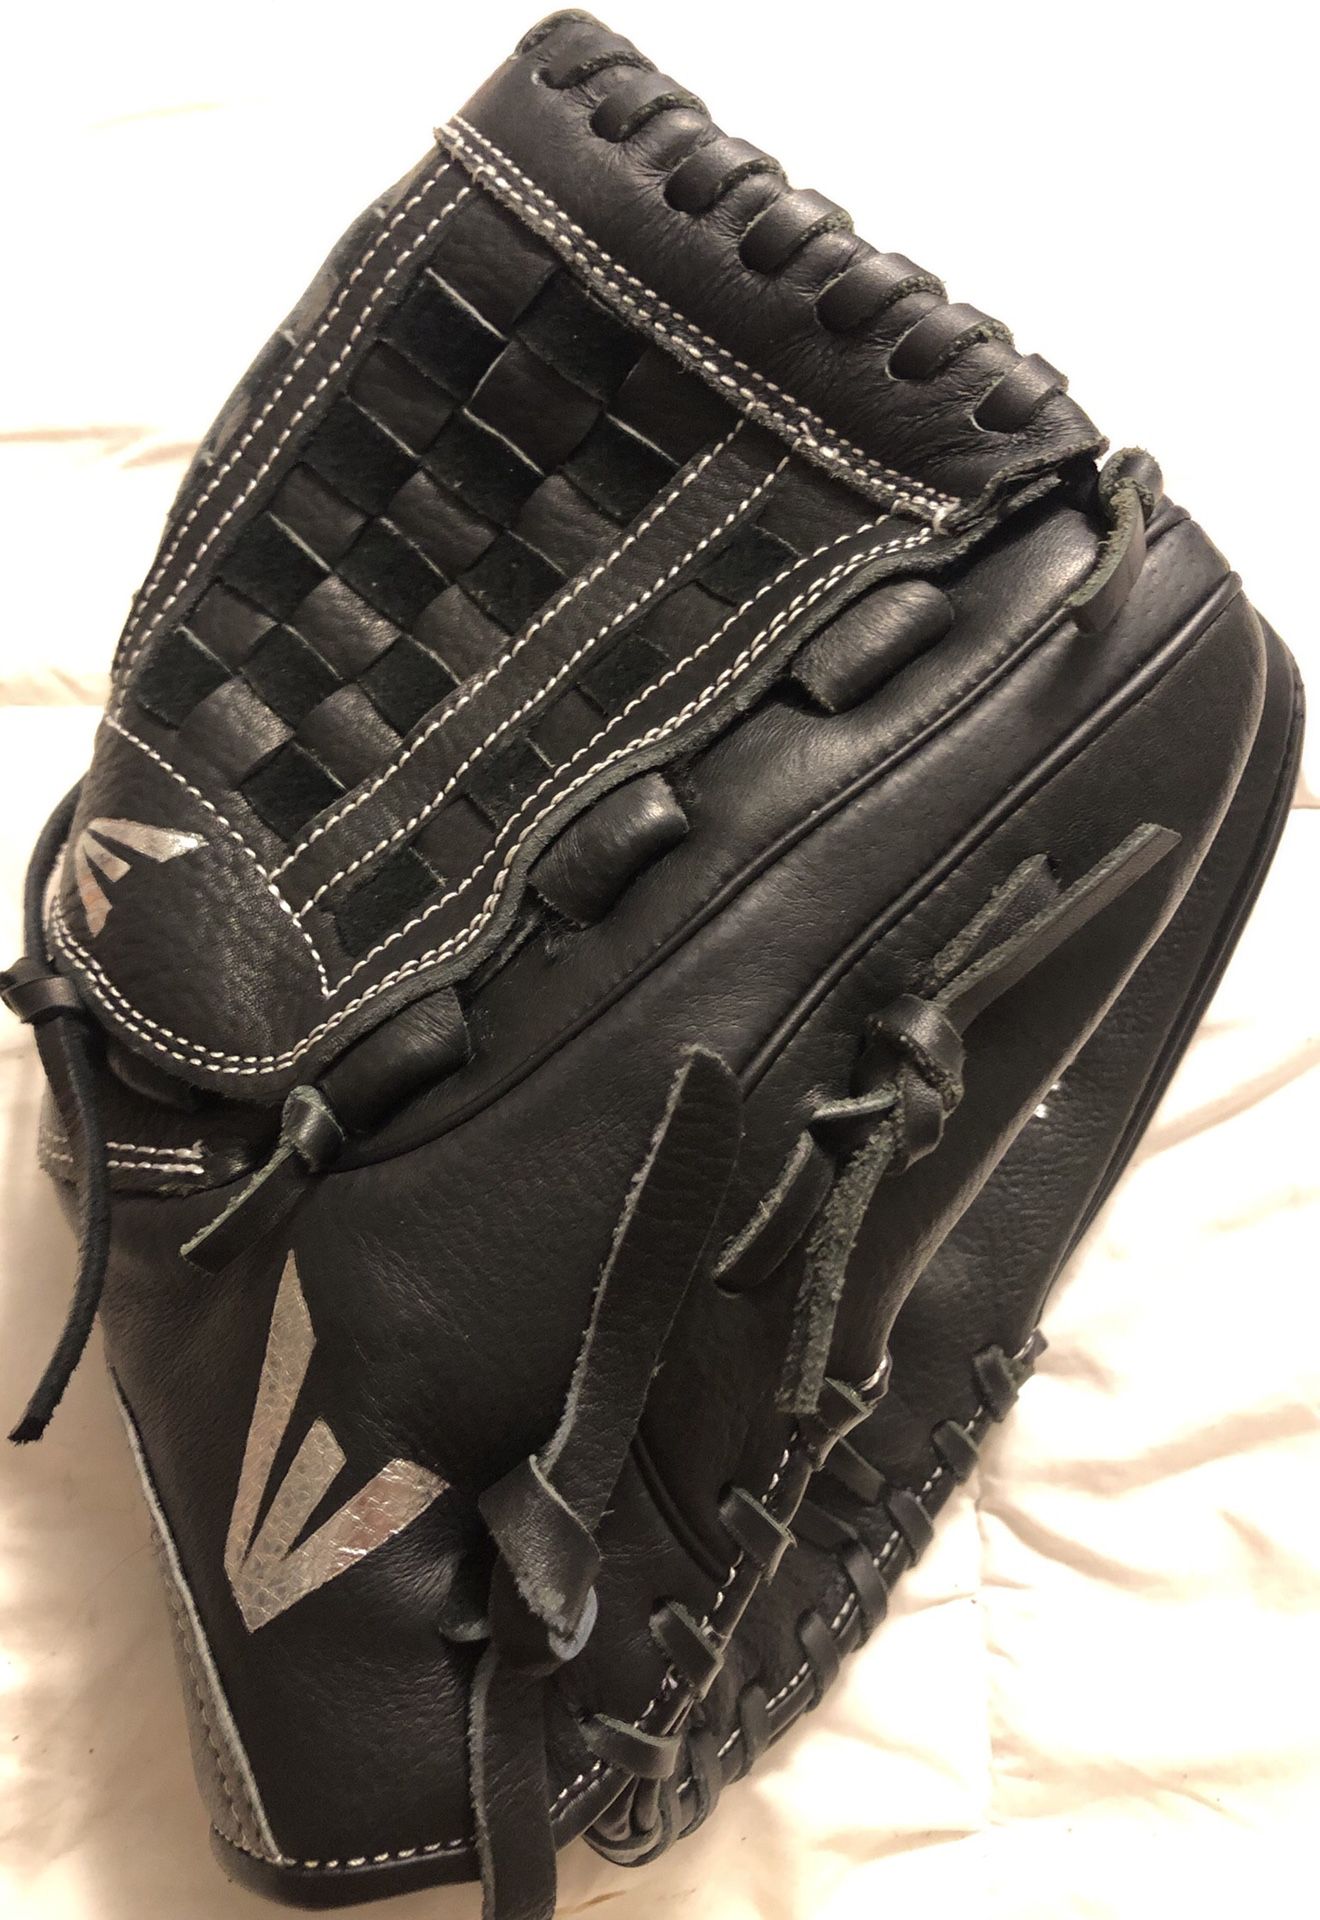 Easton Prowess Softball Glove